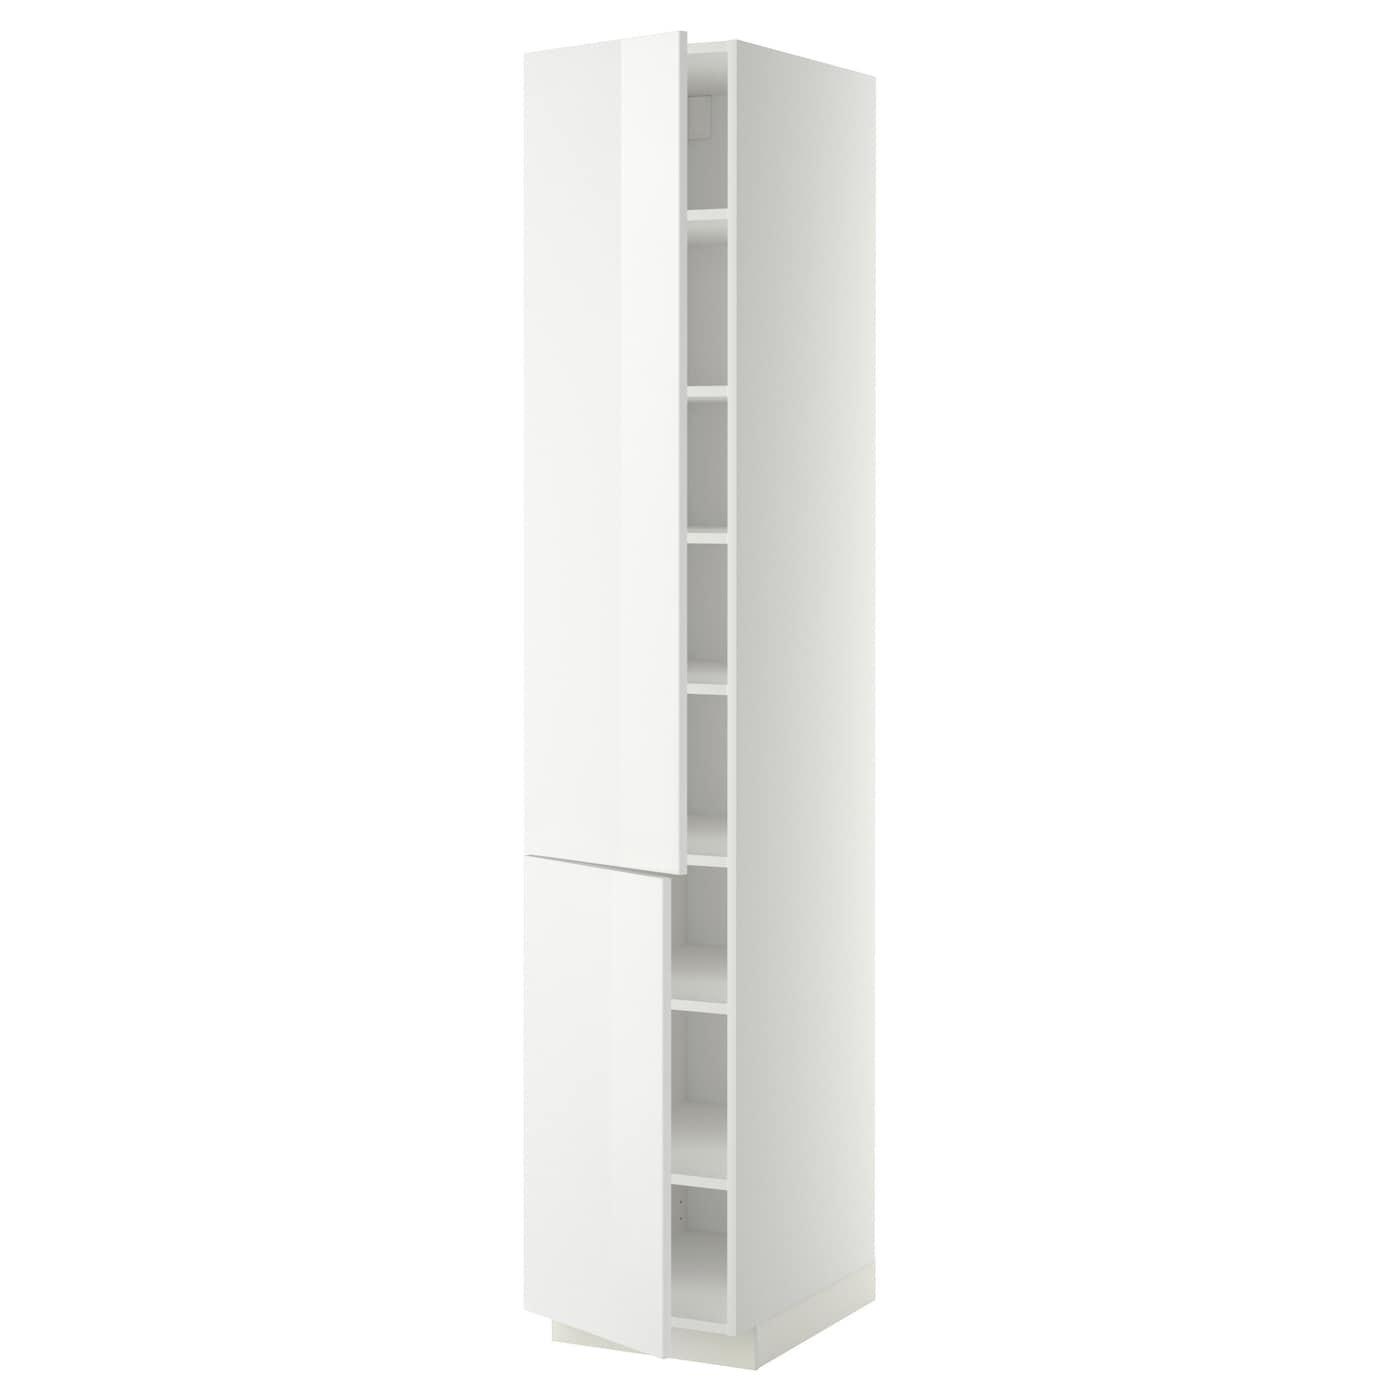 Высокий кухонный шкаф с полками - IKEA METOD/МЕТОД ИКЕА, 220х60х40 см, белый глянцевый